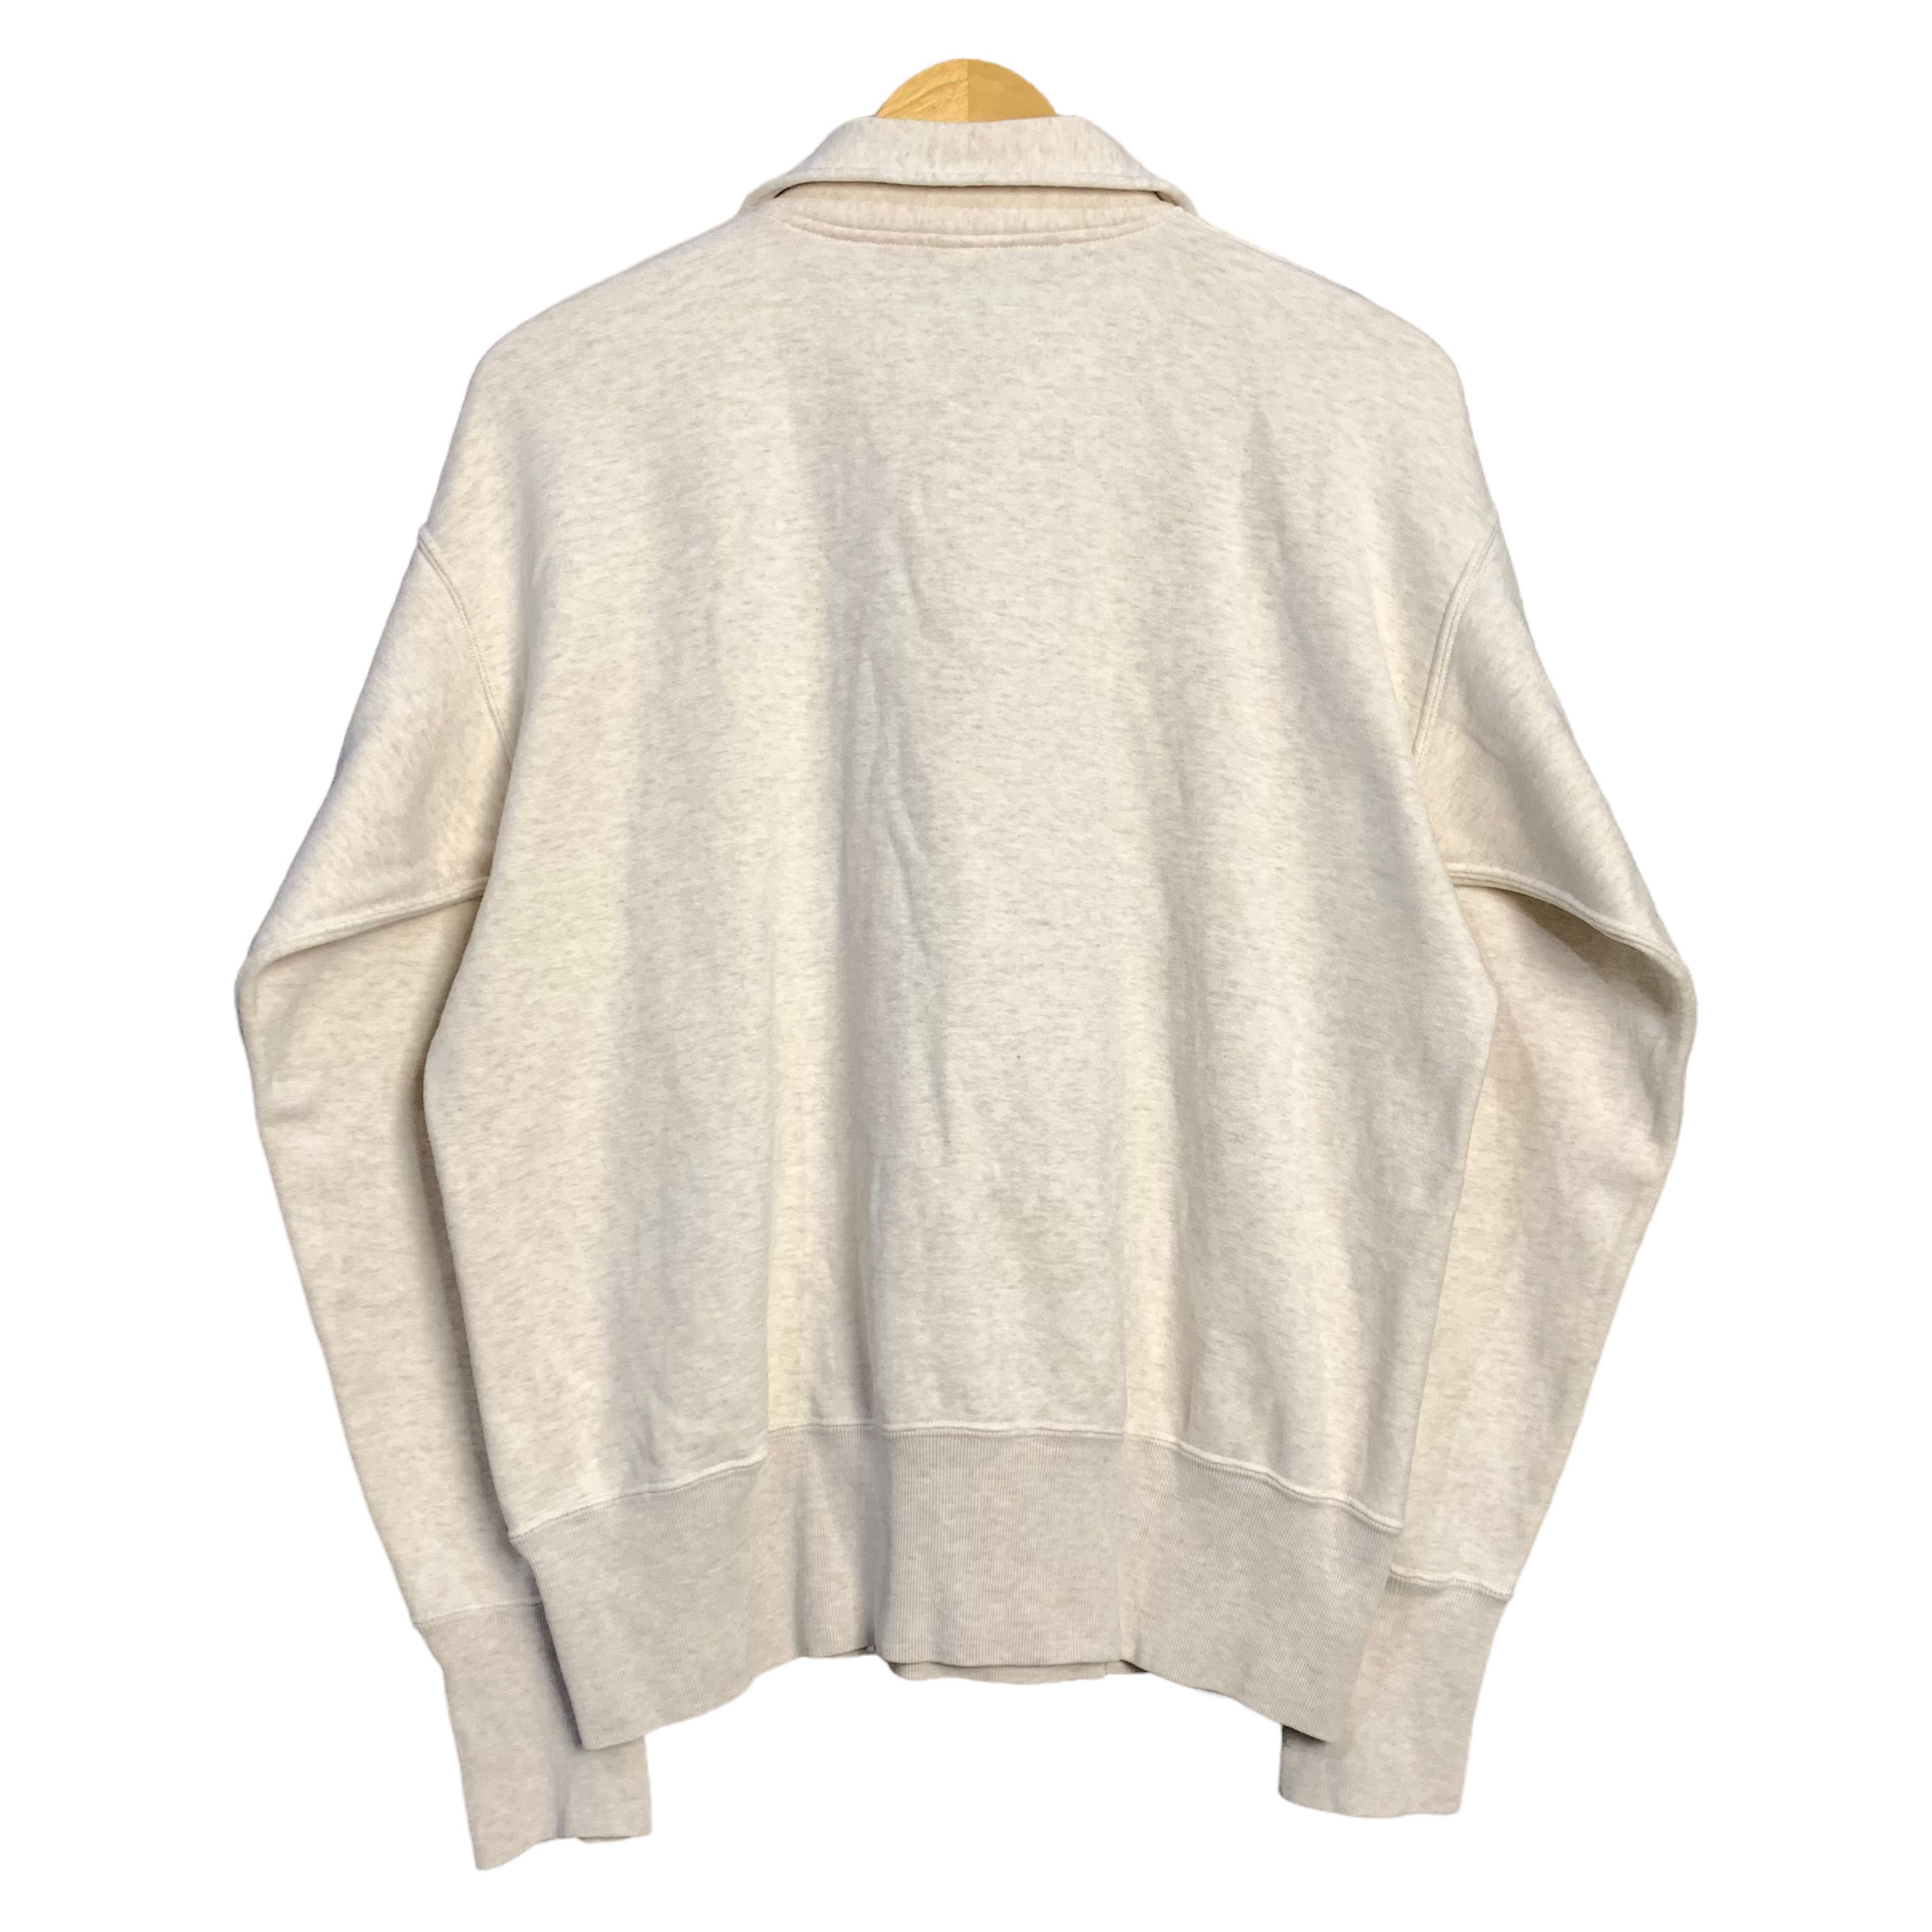 McCoys Sportswear Poison Ivy Half Zip Sweaters - 3